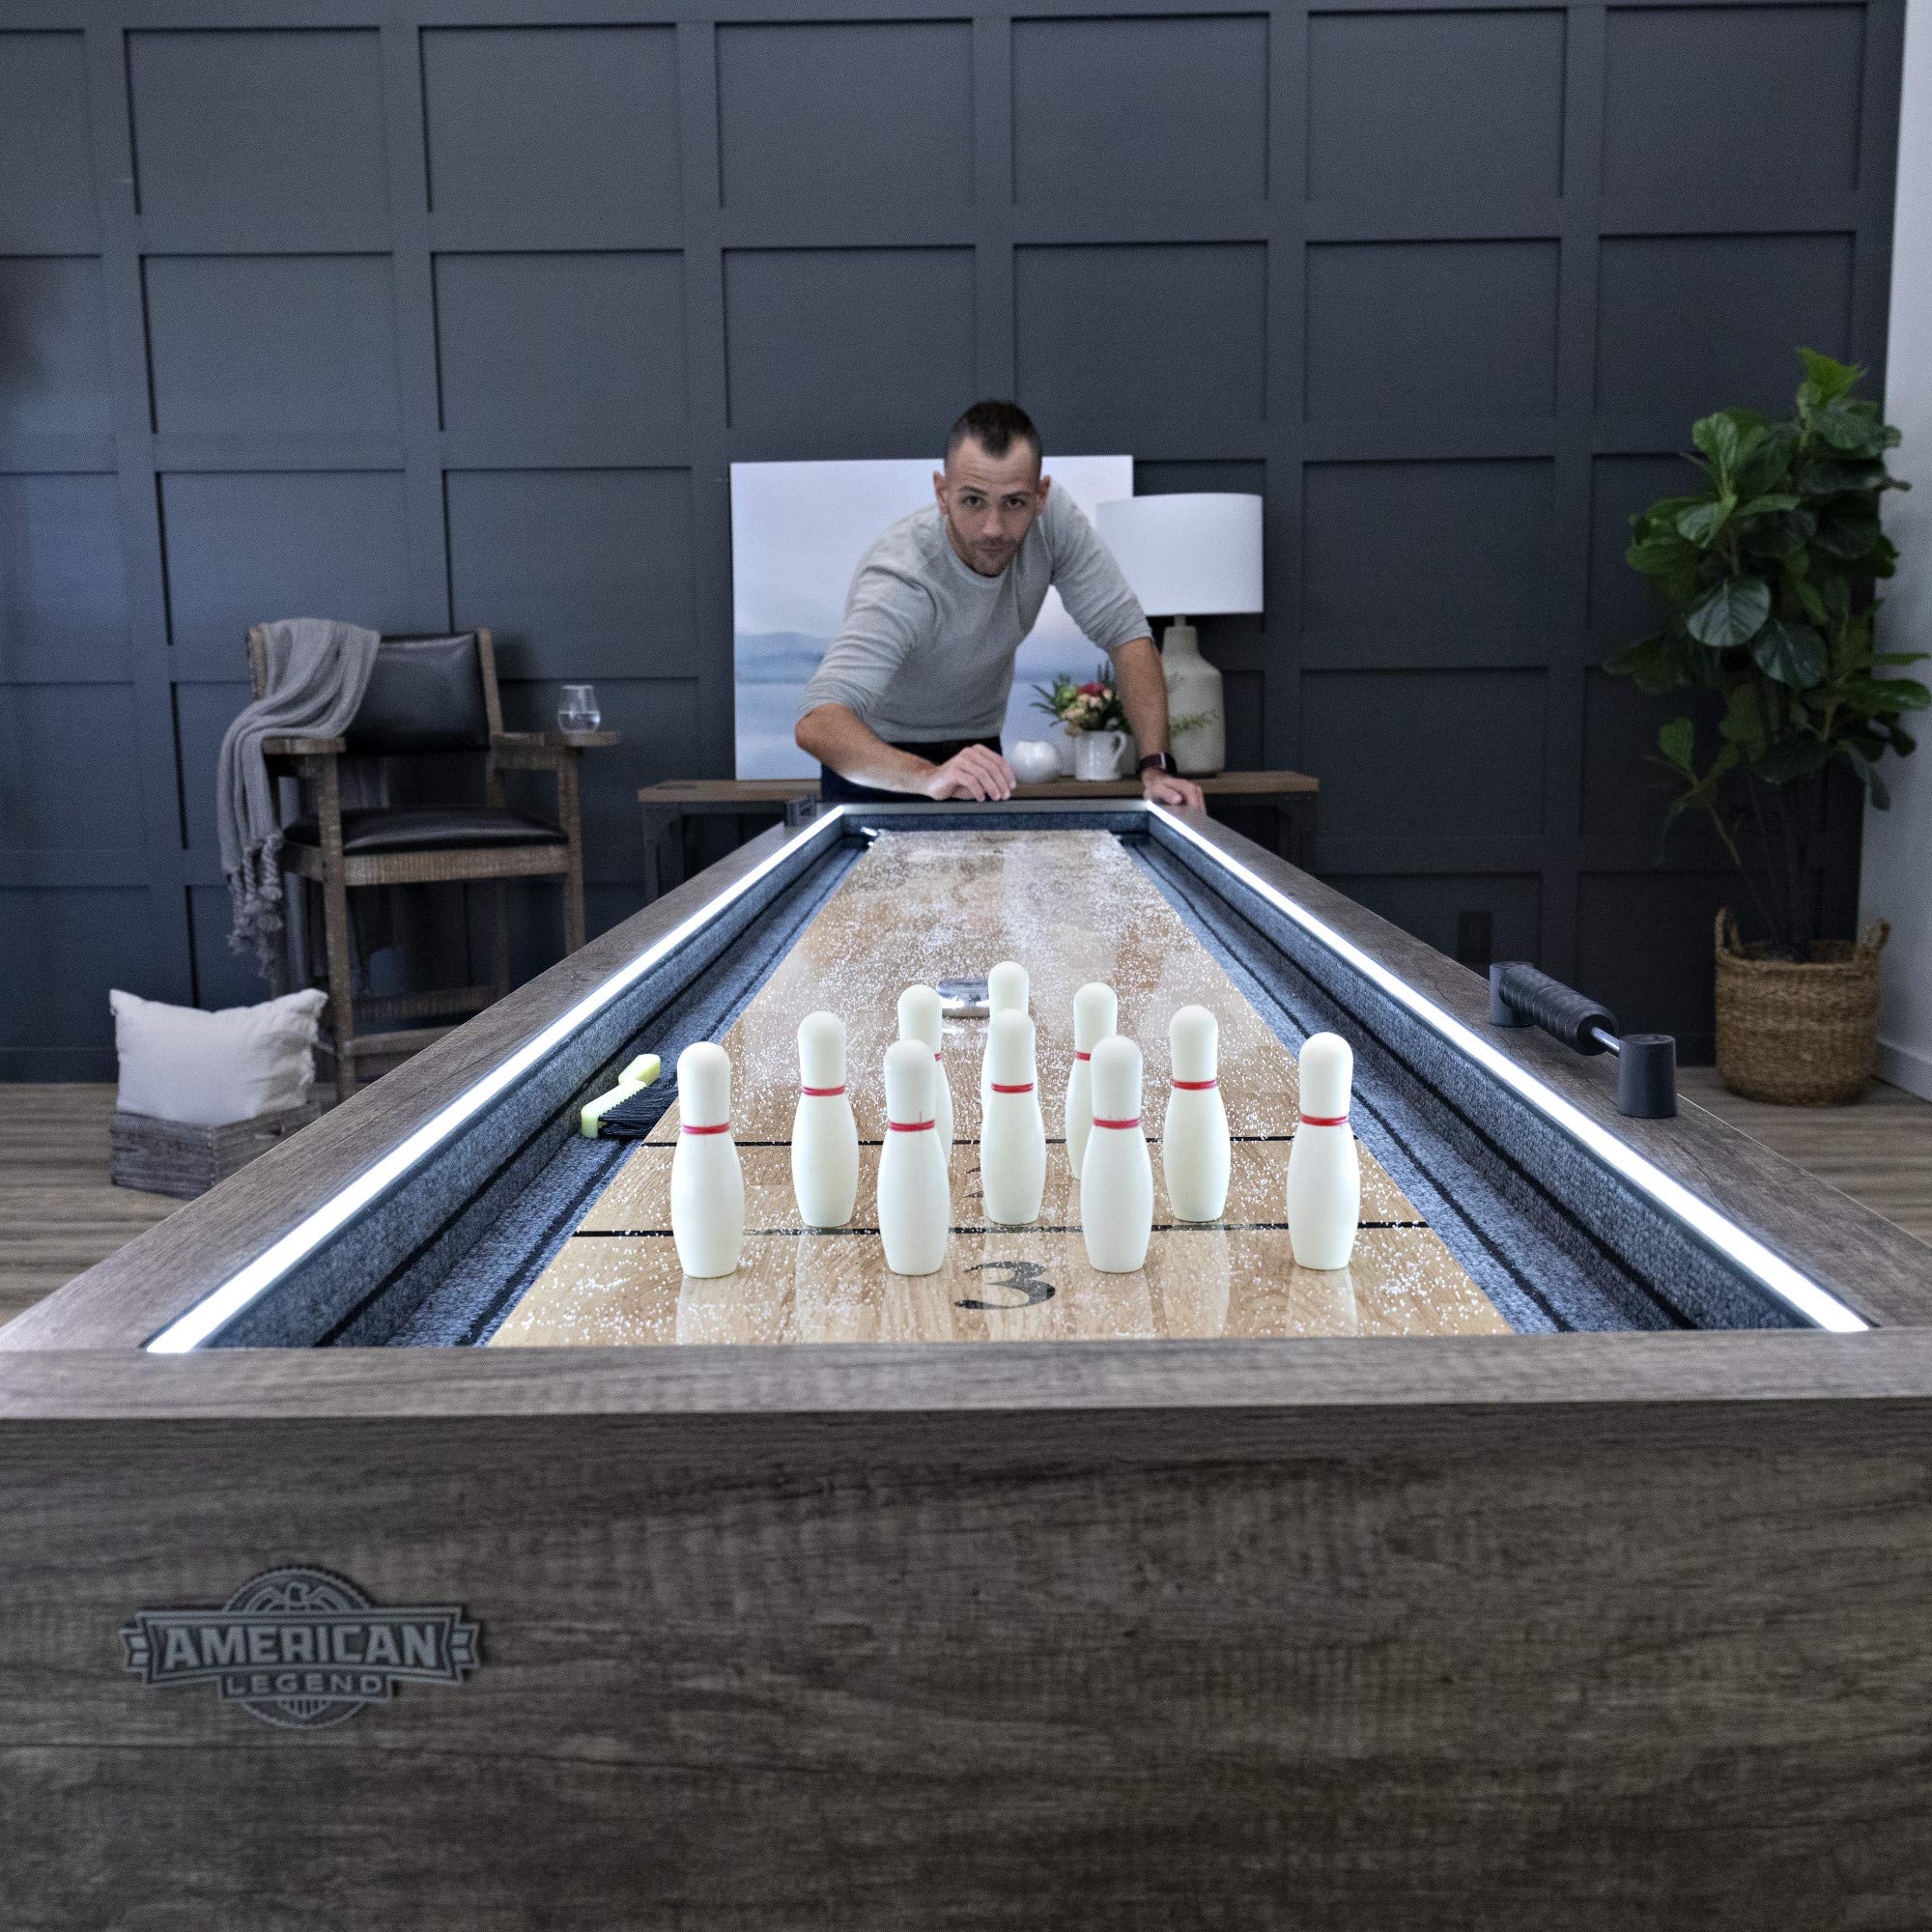 American Legend LED Light Up Shuffleboard Tables - Stonebridge and Kirkwood Models Available